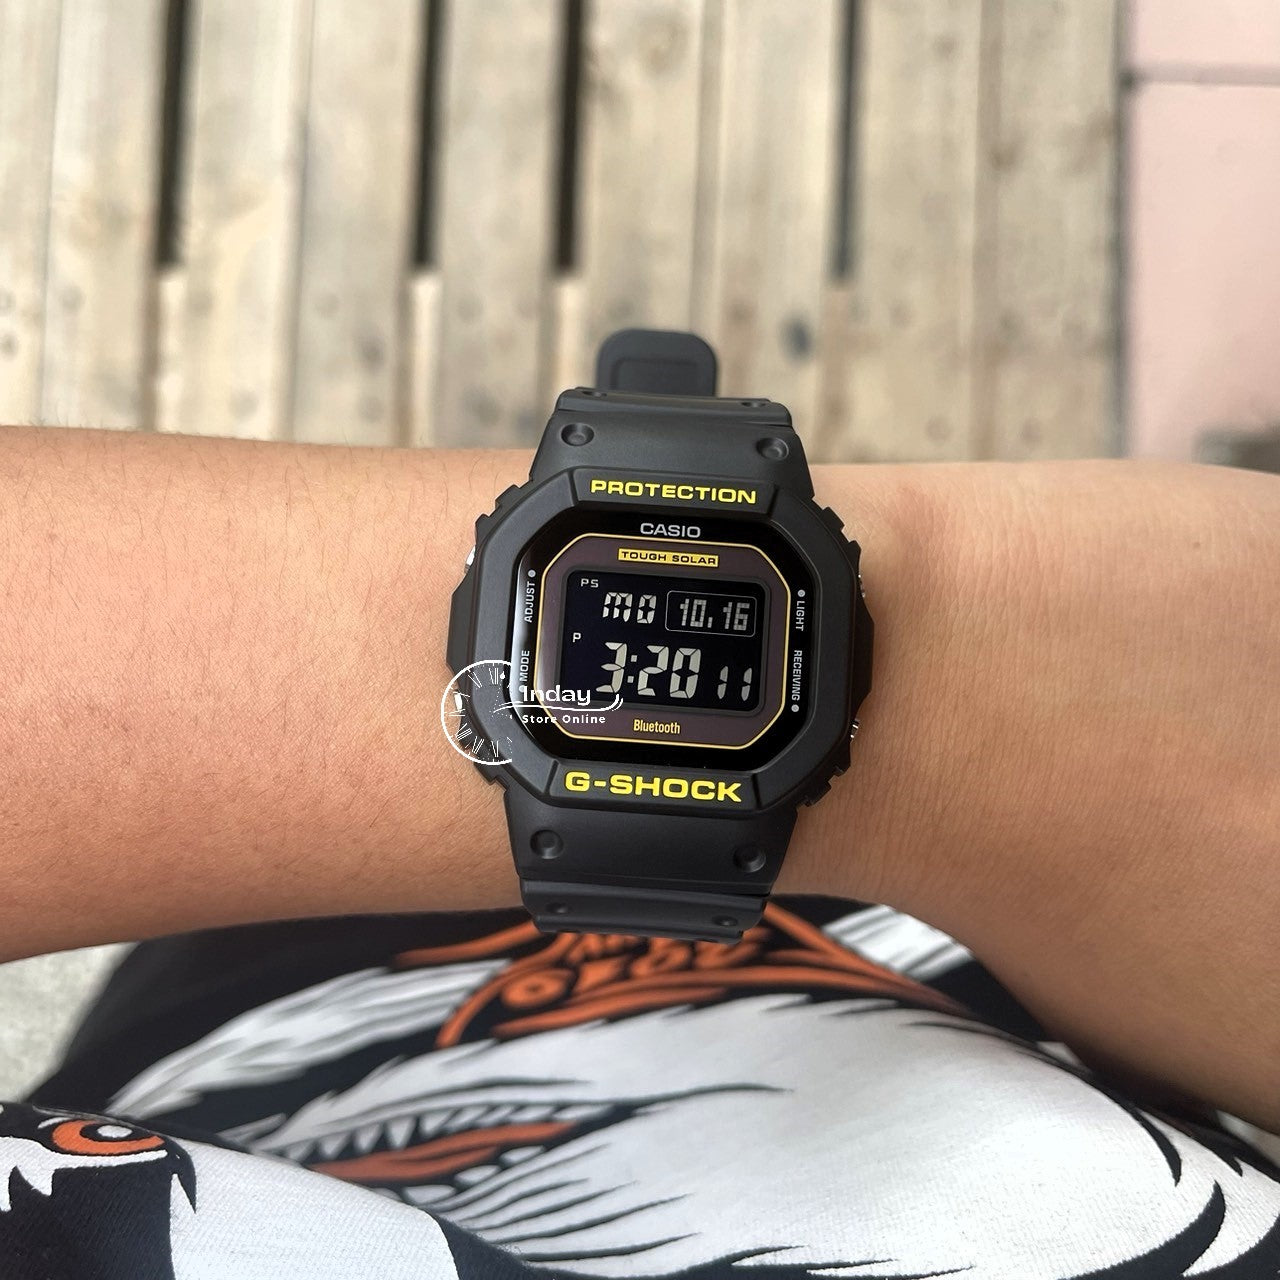 Casio G-Shock Men's Watch GW-B5600CY-1 Digital Black Color 5600 Series Tough Solar (Solar powered)